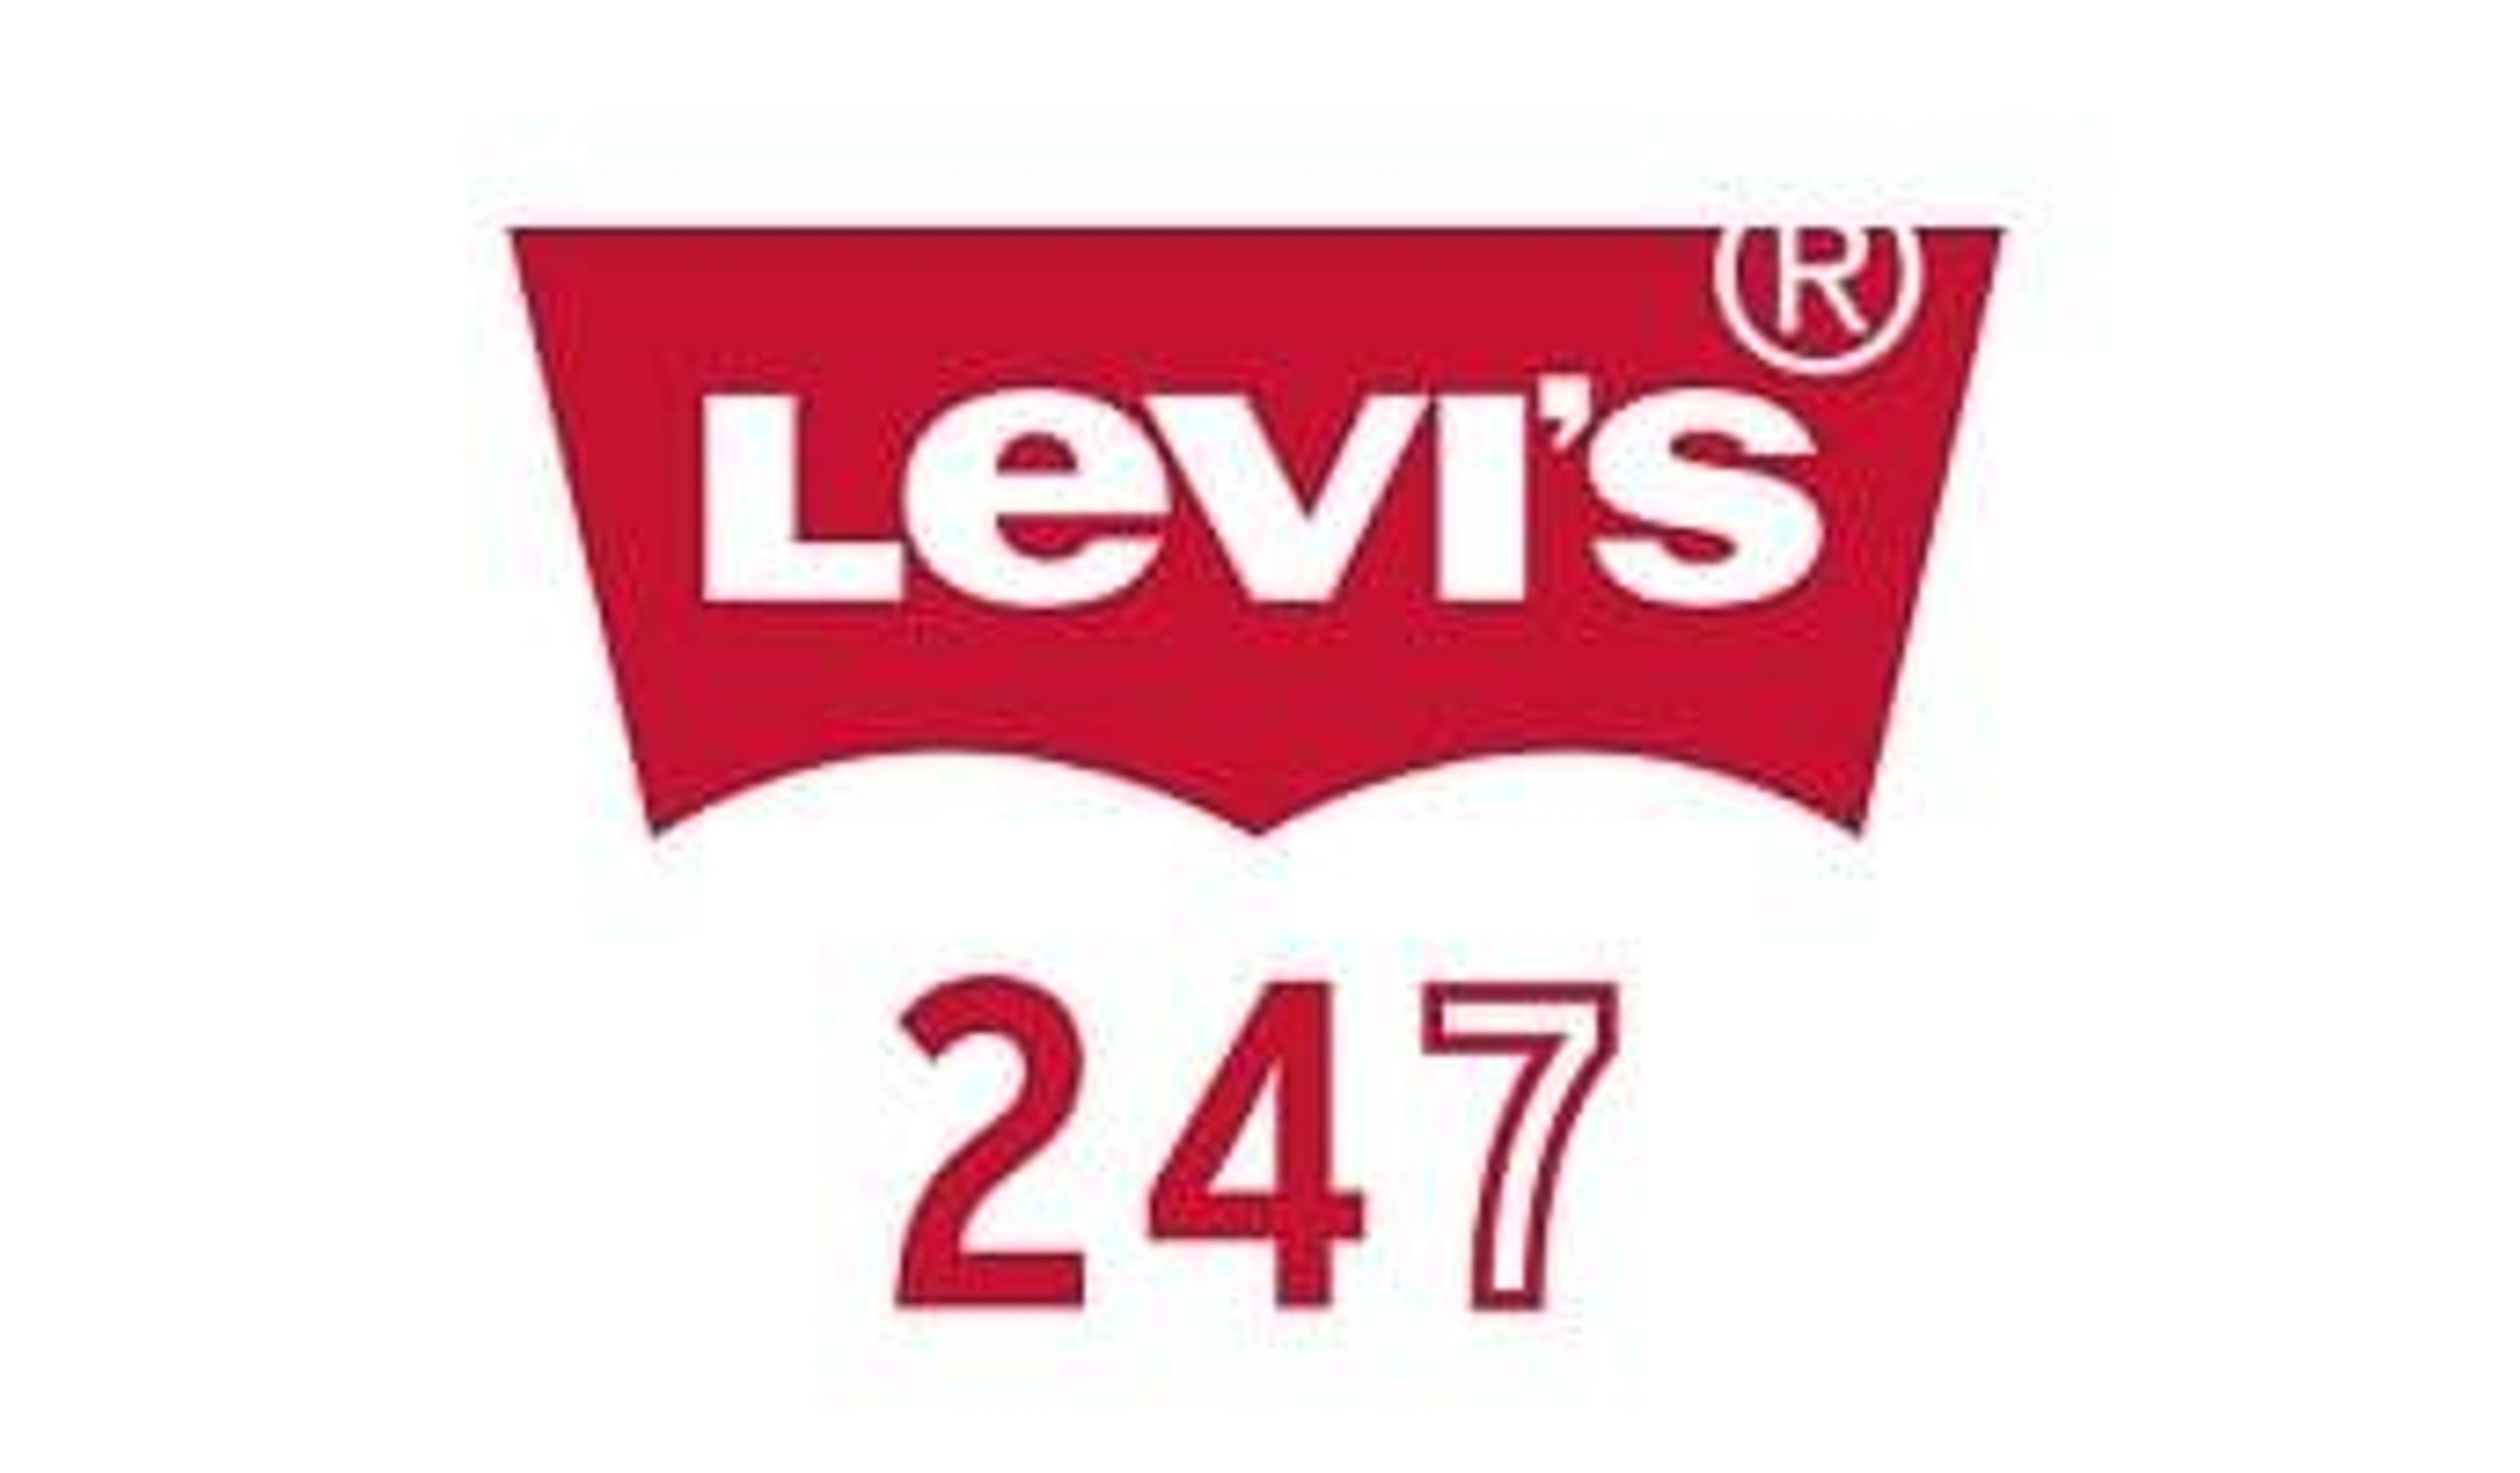  Levi's 247 logo 